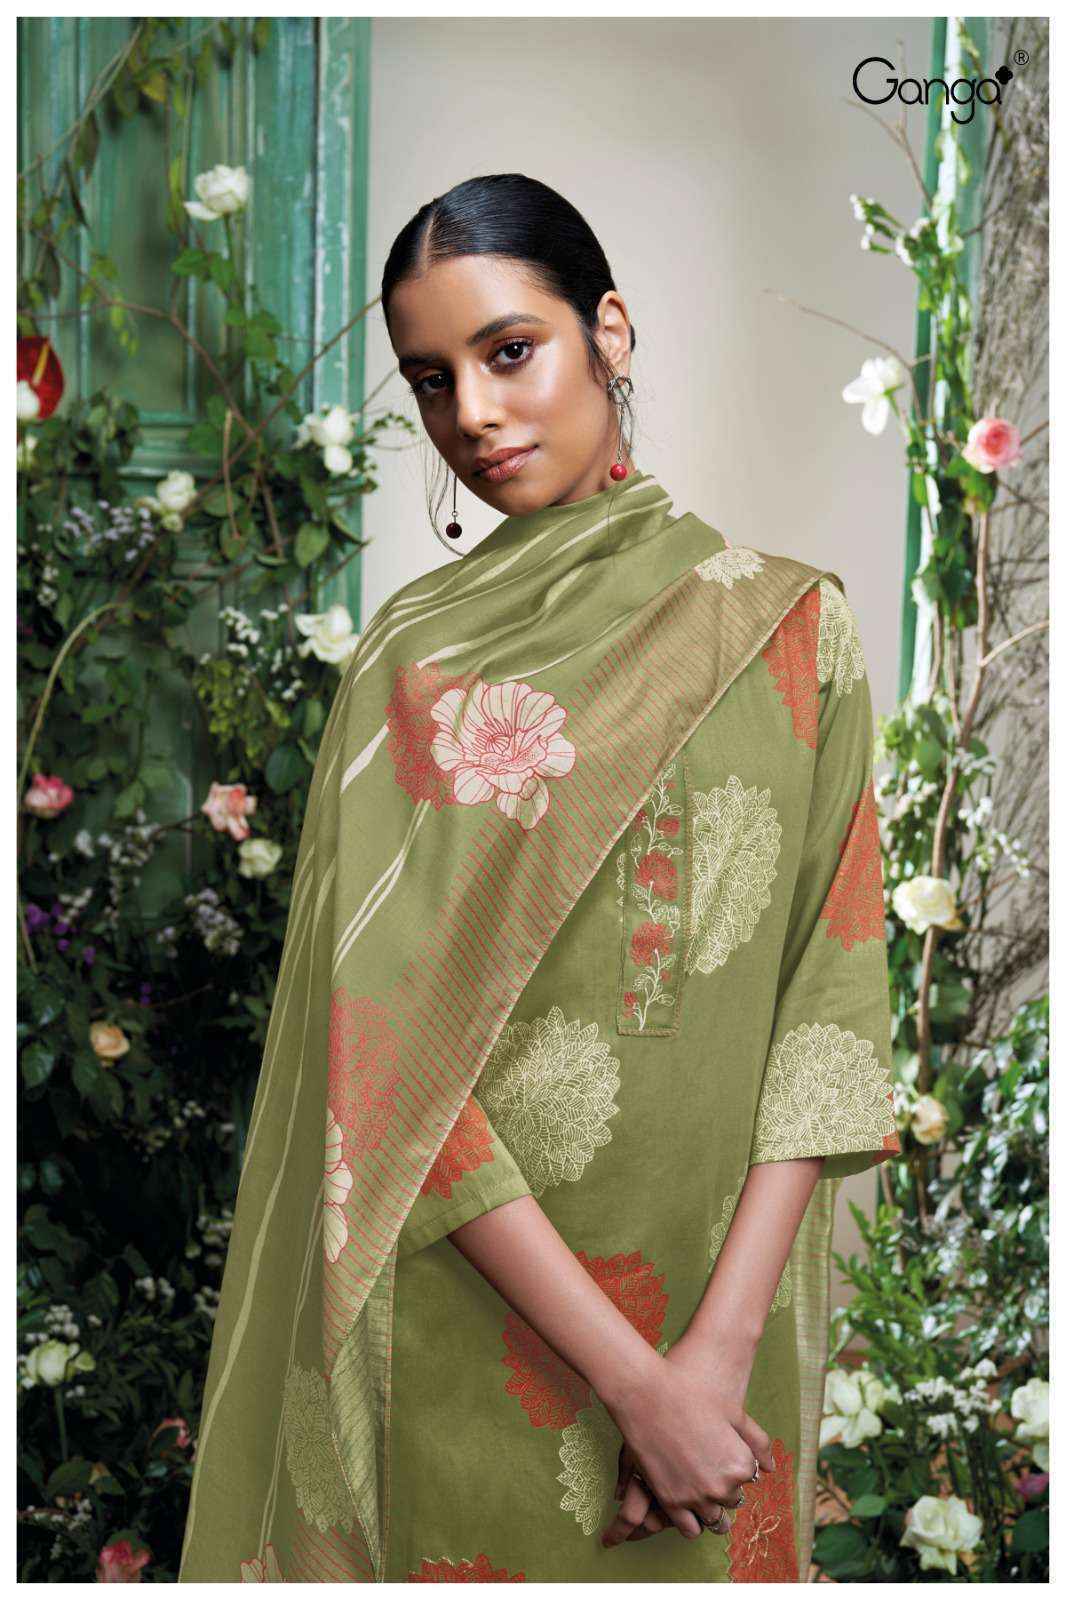 ISOLDE BY GANGA FAMOUS DESIGNER SALWAR SUIT MANUFACTURER - Reewaz  International | Wholesaler & Exporter of indian ethnic wear catalogs.